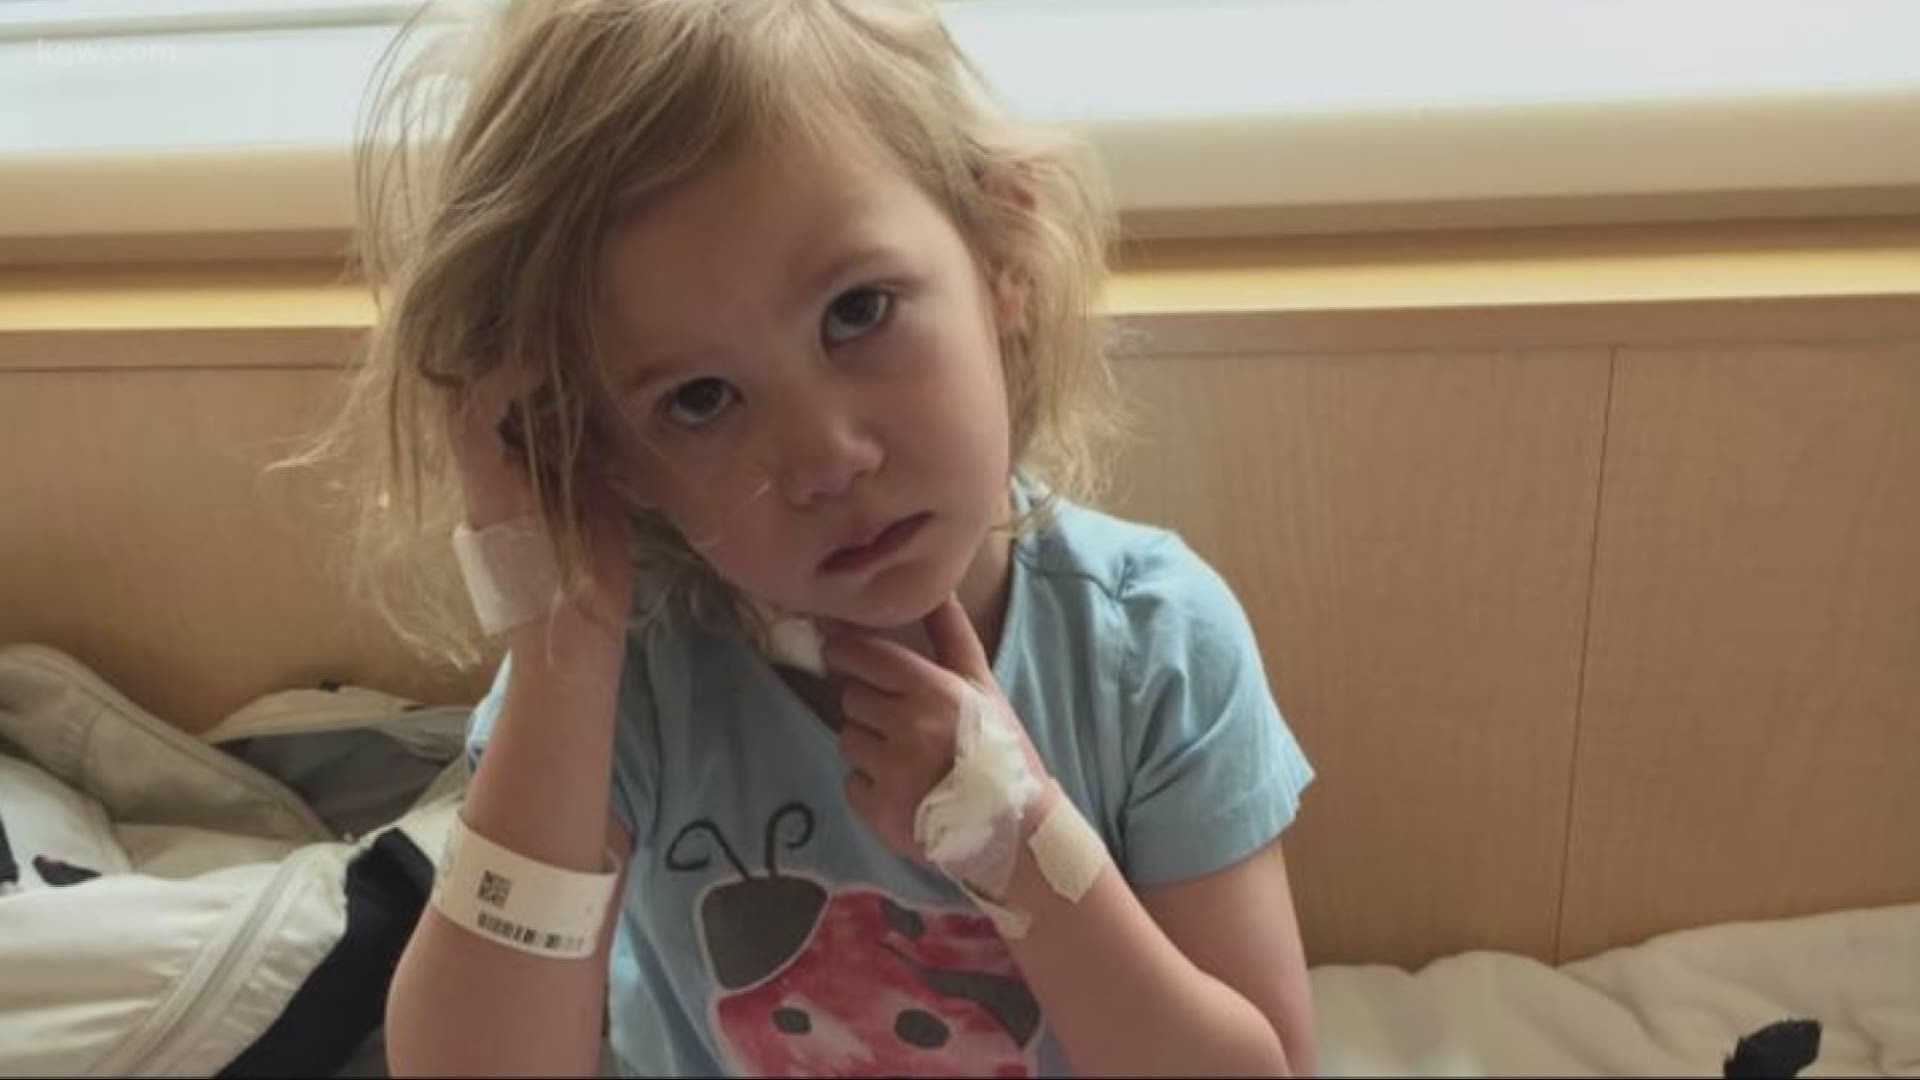 An Oregon family is raising money for a little girl's heart transplant.